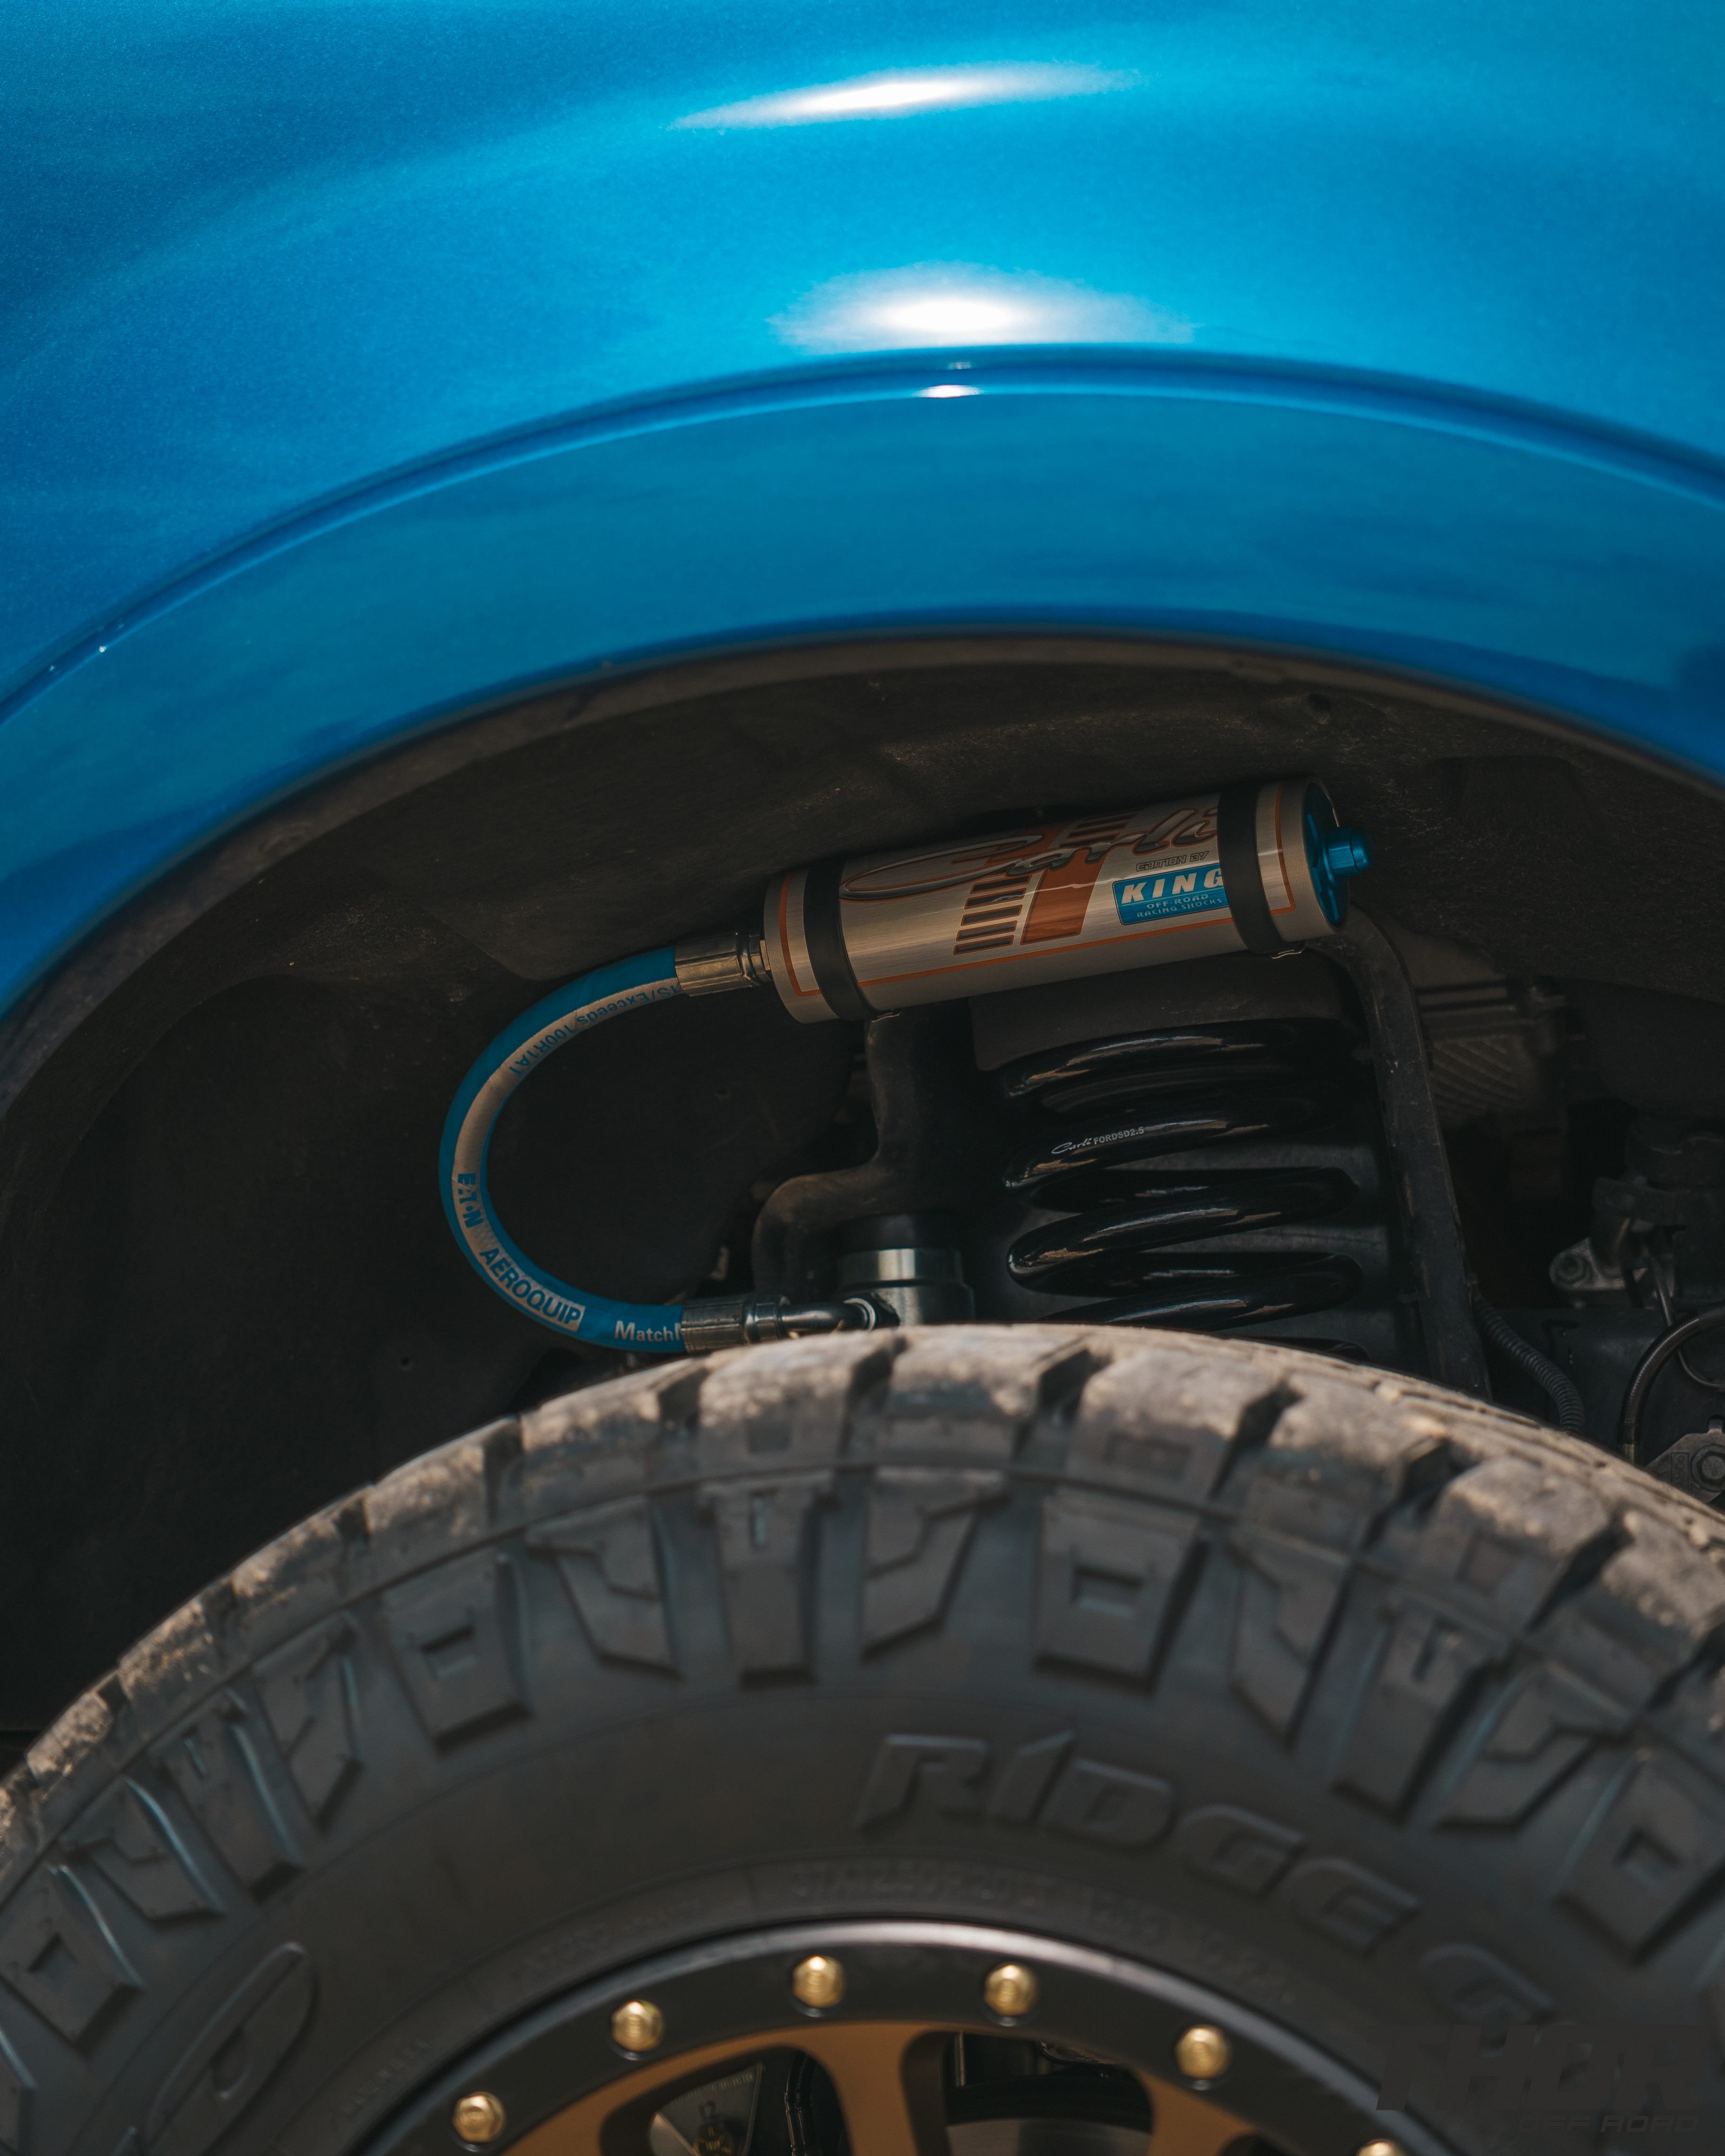 2022 Ford F-250 Super Duty Platinum in Blue with Carli 3.5" Pintop Suspension Kit, Carli Torsion Sway Bar, Carli High Mount Steering Stabilizer, Carli Low Mount Steering Stabilizer, Carli Radius Arms, 20x9" Method 305 NV Bronze Wheels, 37x12.50R20 Nitto Ridge Grappler Tires